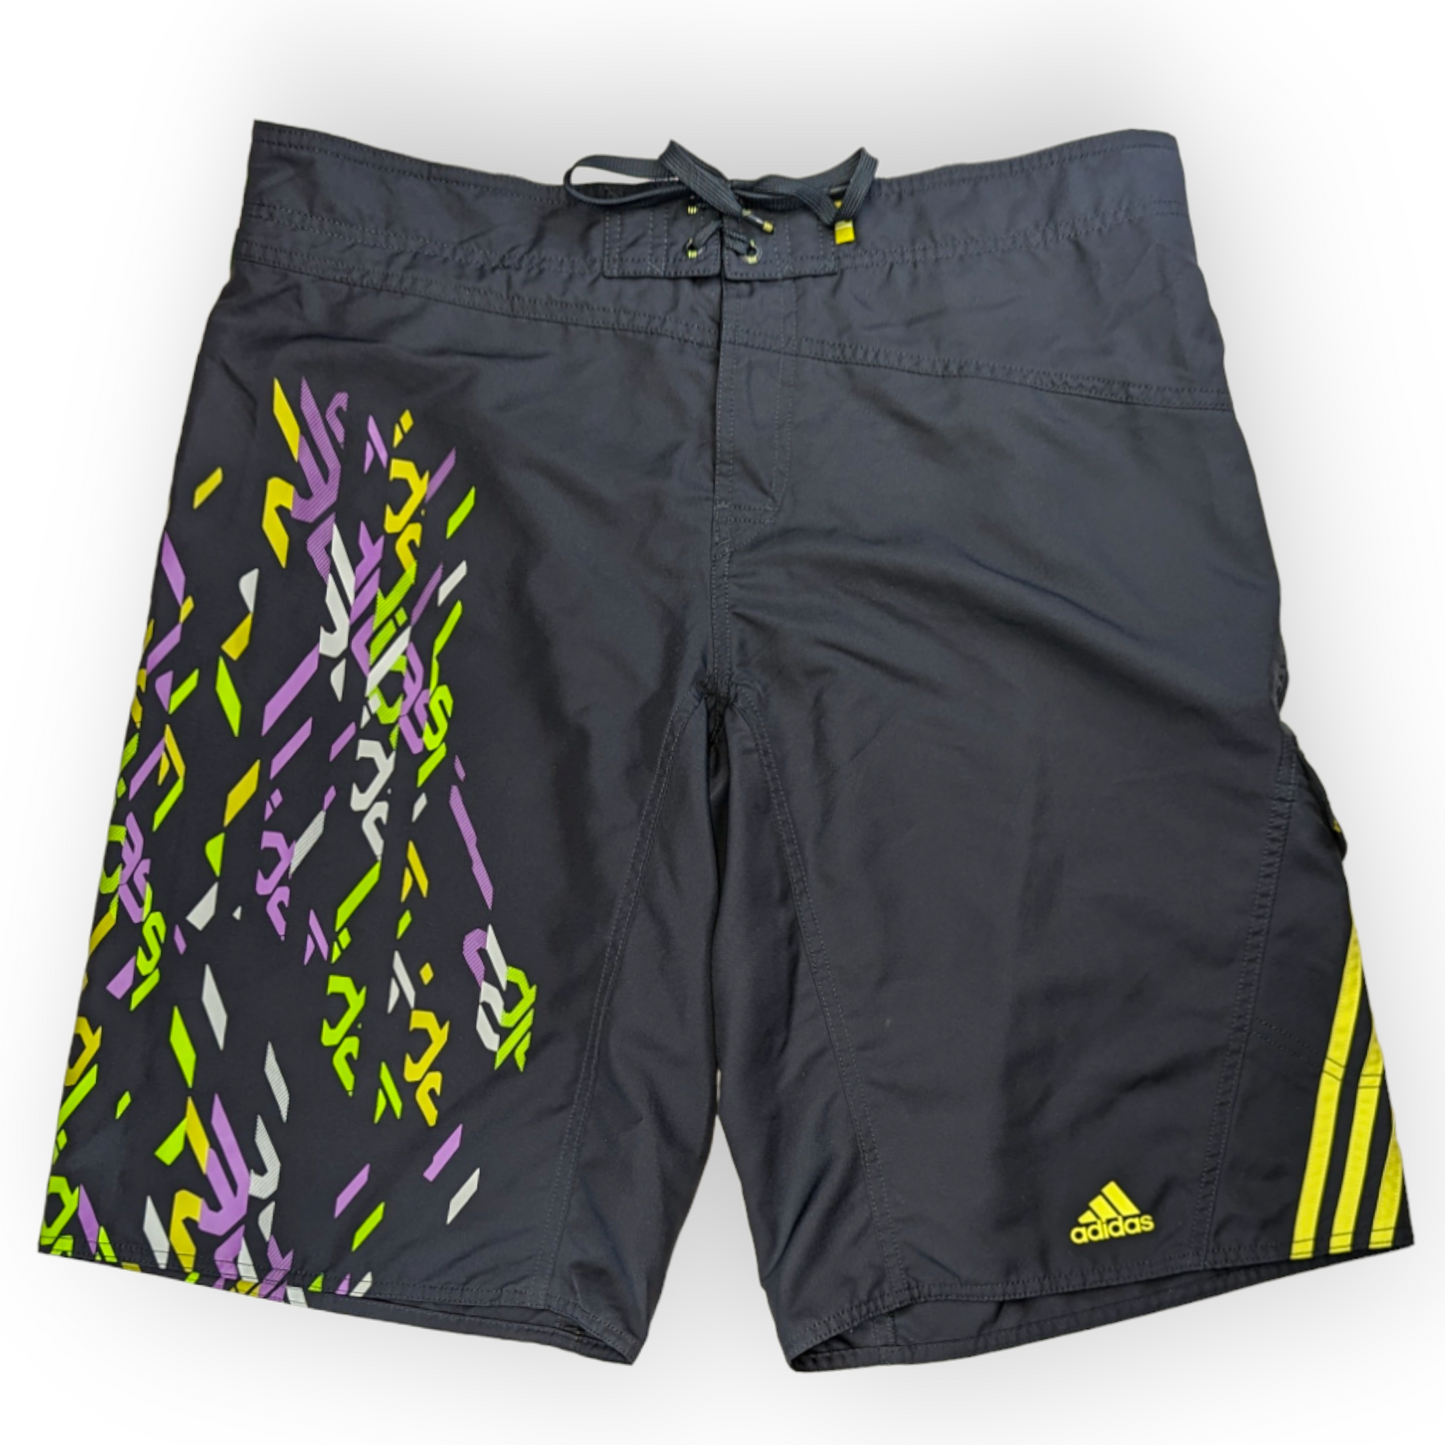 Adidas Black Multicolour Design Swimwear Shorts Men Size XL